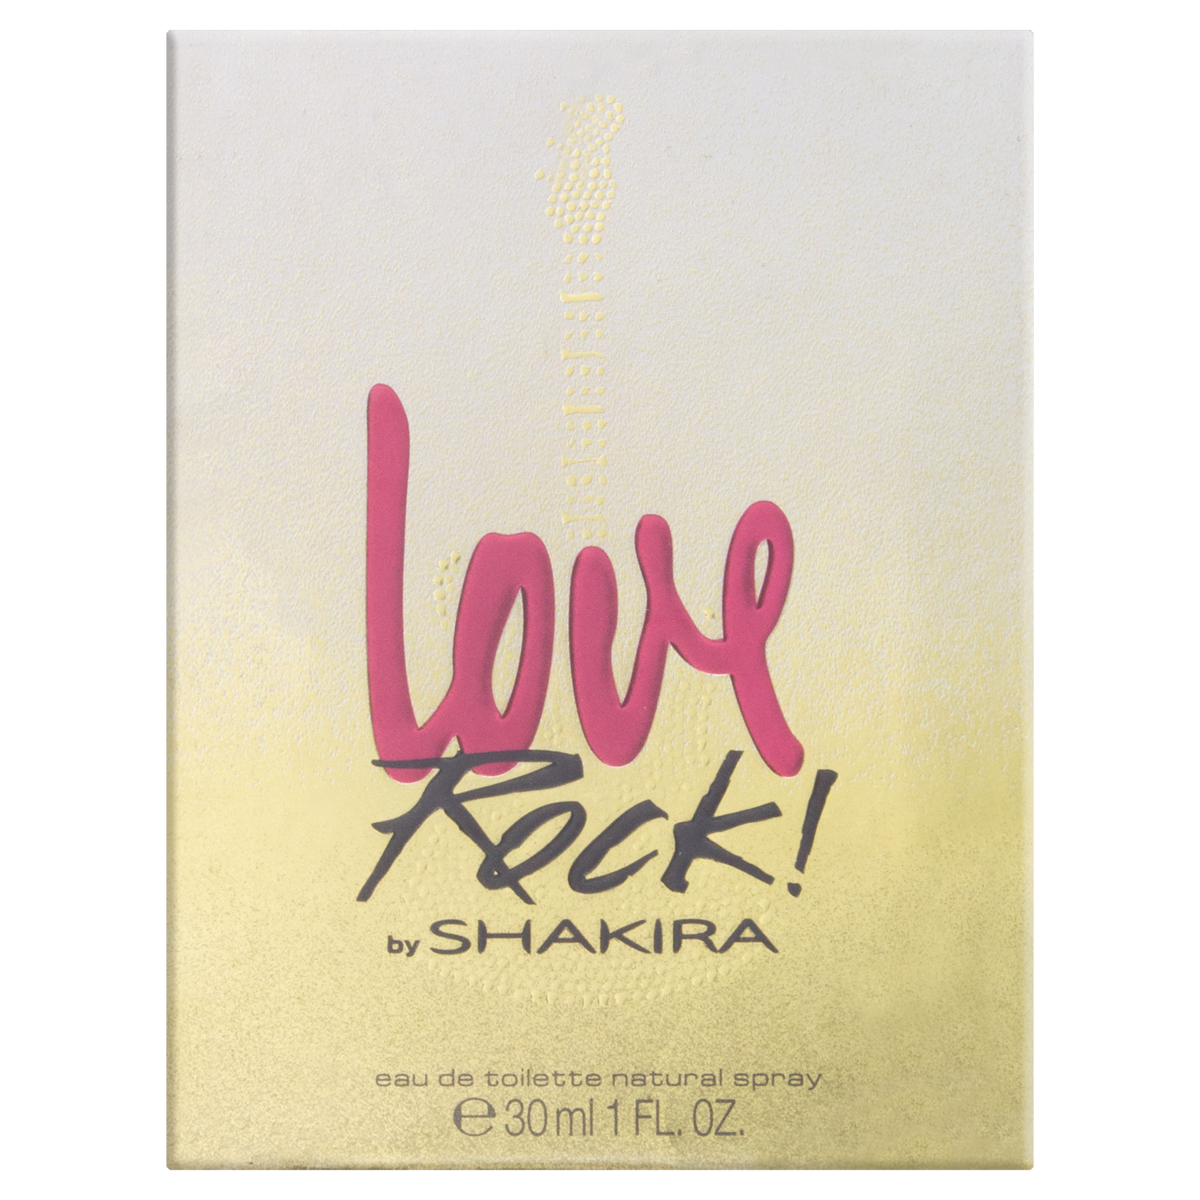 8411061810989 - EAU DE TOILETTE LOVE ROCK! SHAKIRA CAIXA 30ML